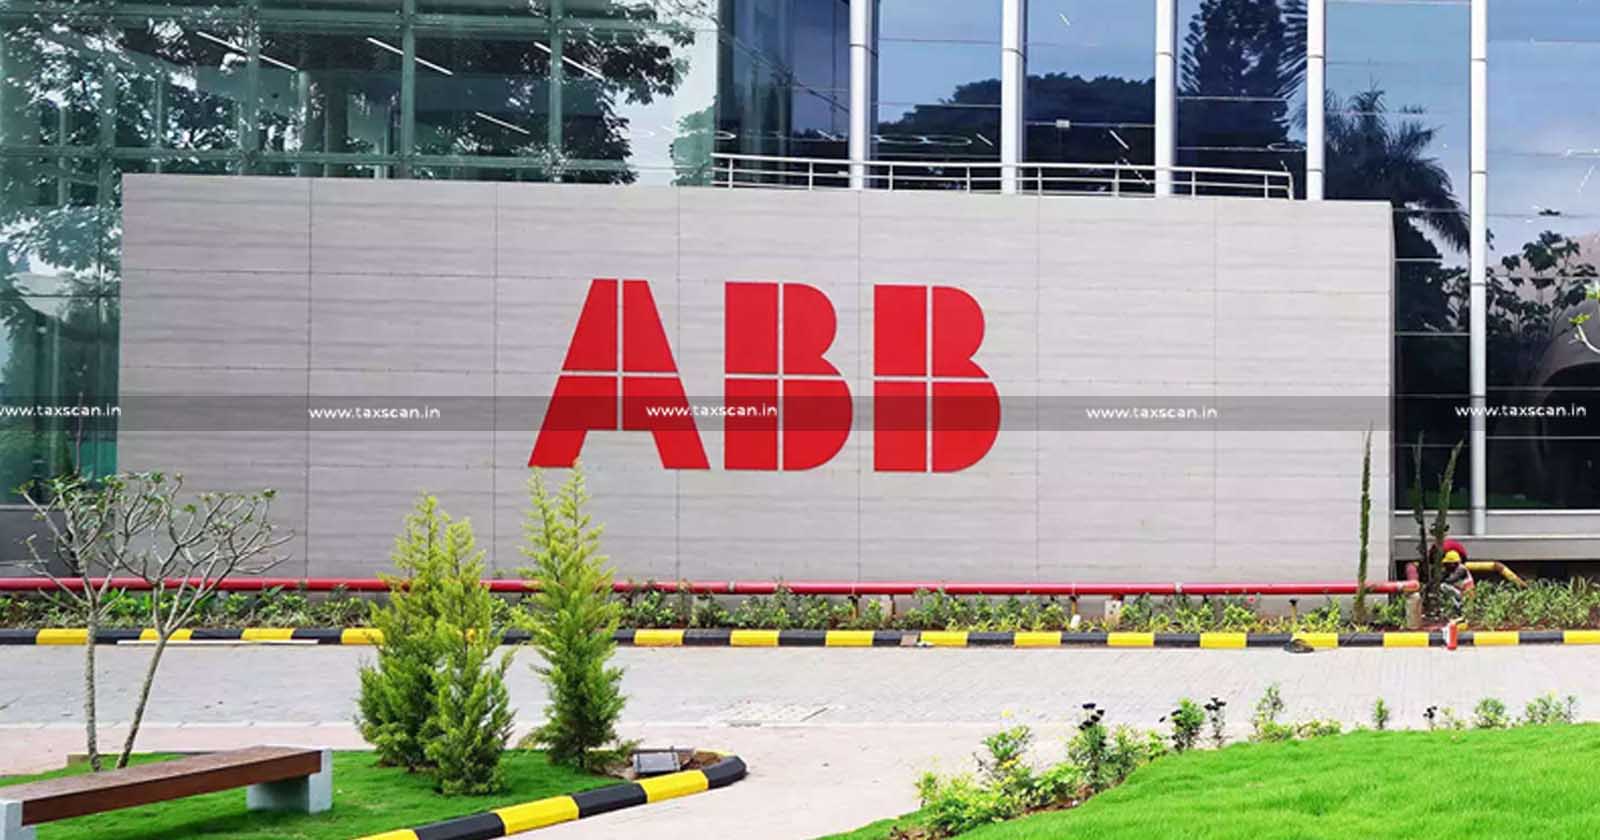 CA intern Vacancy in ABB - CA Vacancy in ABB job - vacancy in ABB - TAXSSCAN